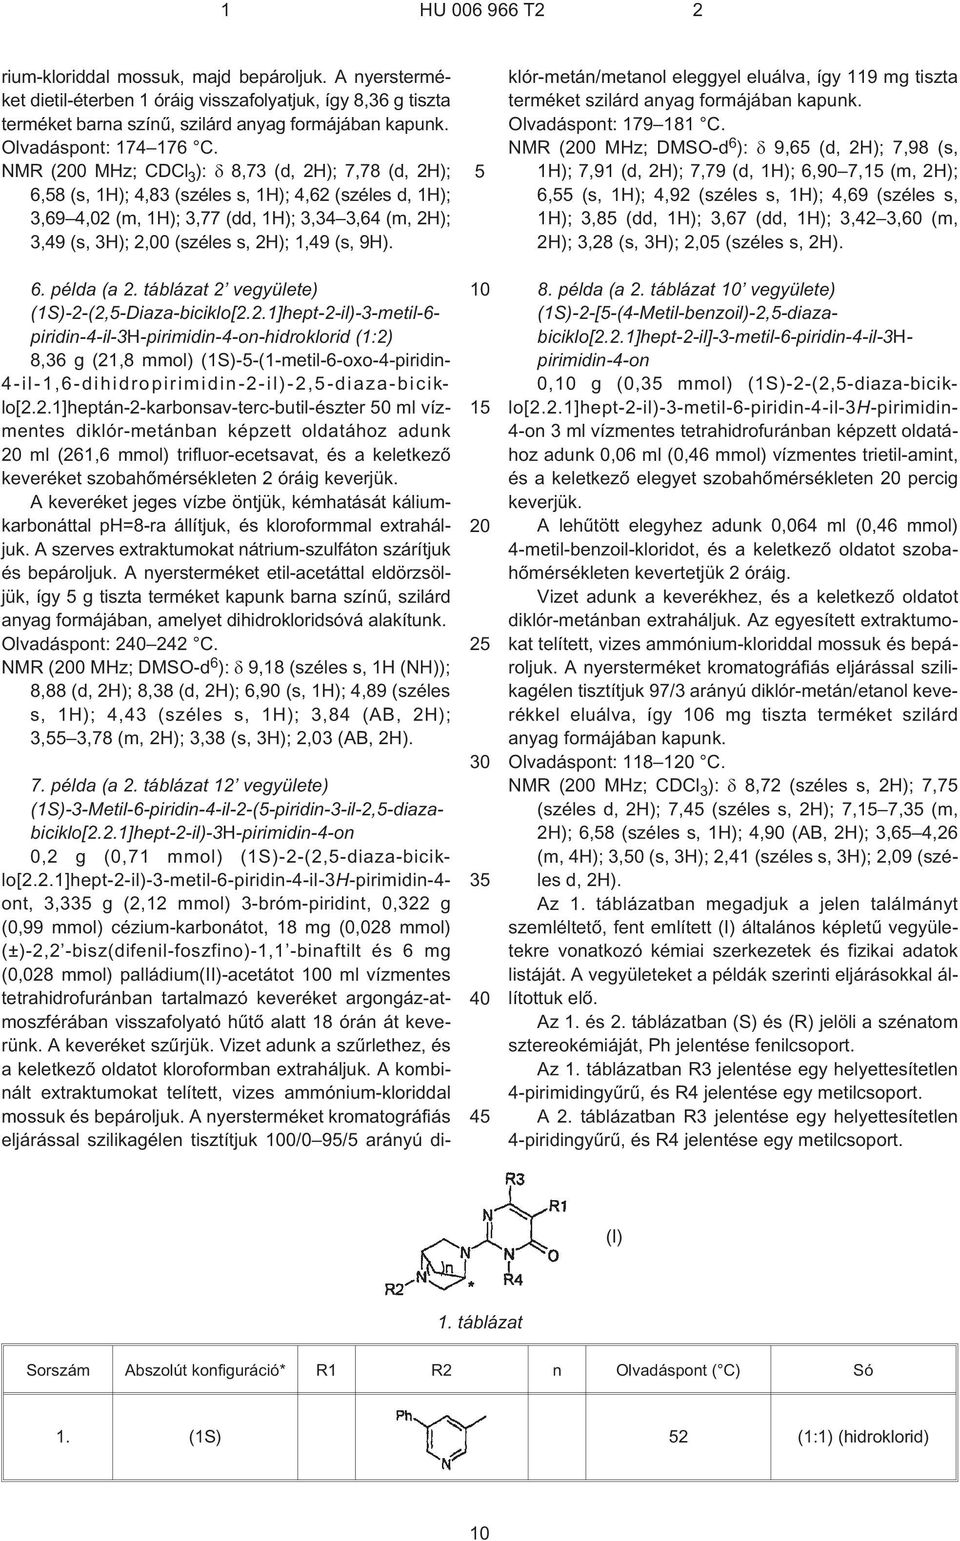 (s, 9H). 6. példa (a 2. táblázat 2 vegyülete) (1S)-2¹(2,-Diaza-biciklo[2.2.1]hept-2¹il)-3-metil-6- piridin-4-il-3h-pirimidin-4-on-hidroklorid (1:2) 8,36 g (21,8 mmol) (1S)--(1¹metil-6-oxo-4-piridin- 4-il-1,6-dihidropirimidin-2¹il)-2,-diaza-biciklo[2.